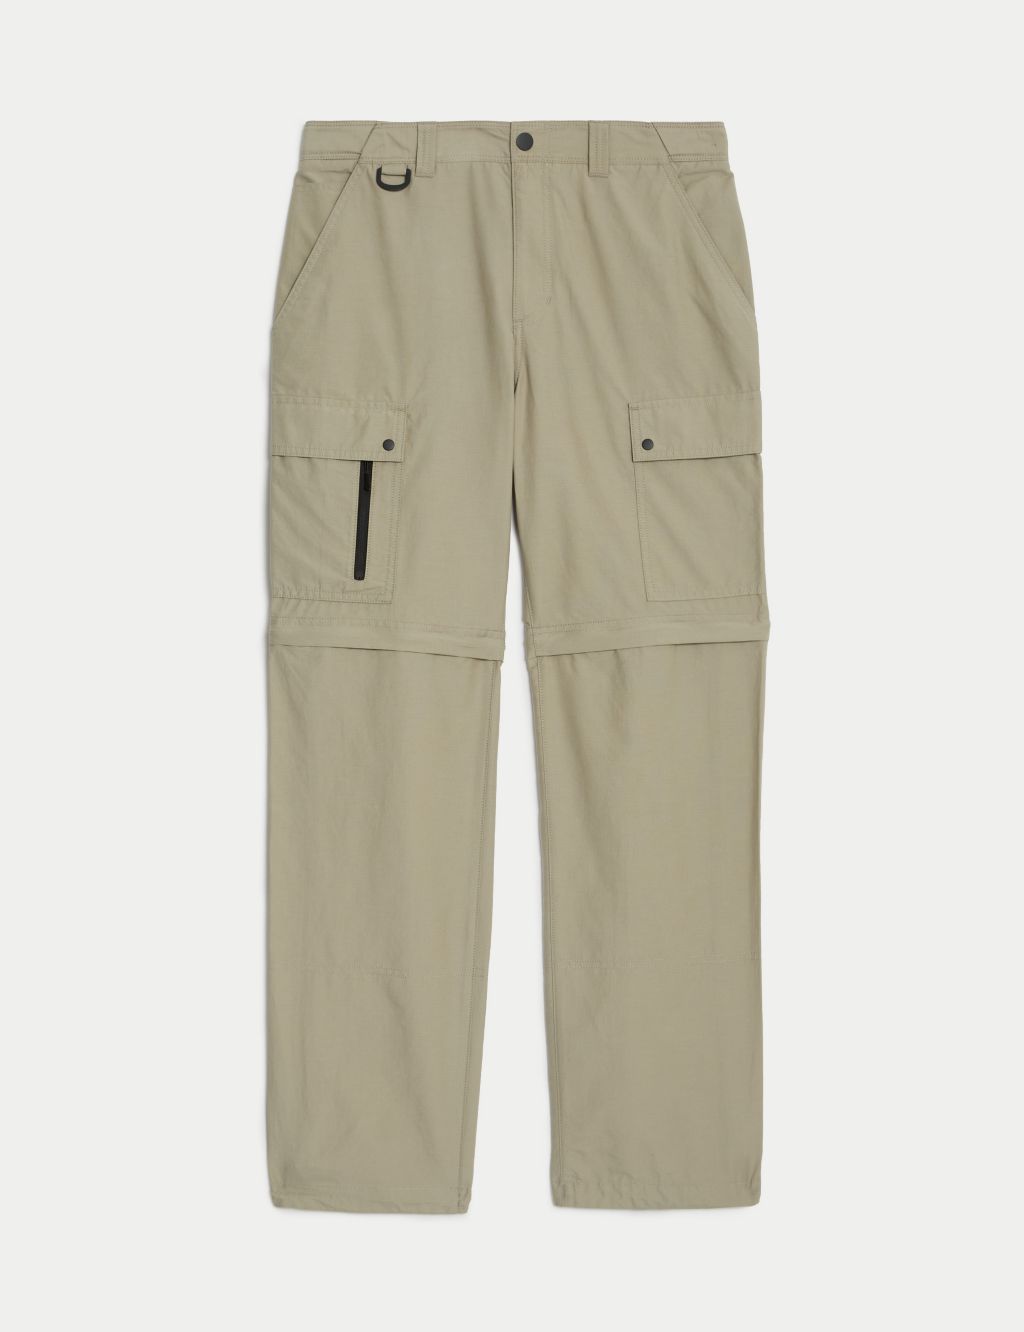 Zip Off Trekking Trousers with Stormwear™ image 2